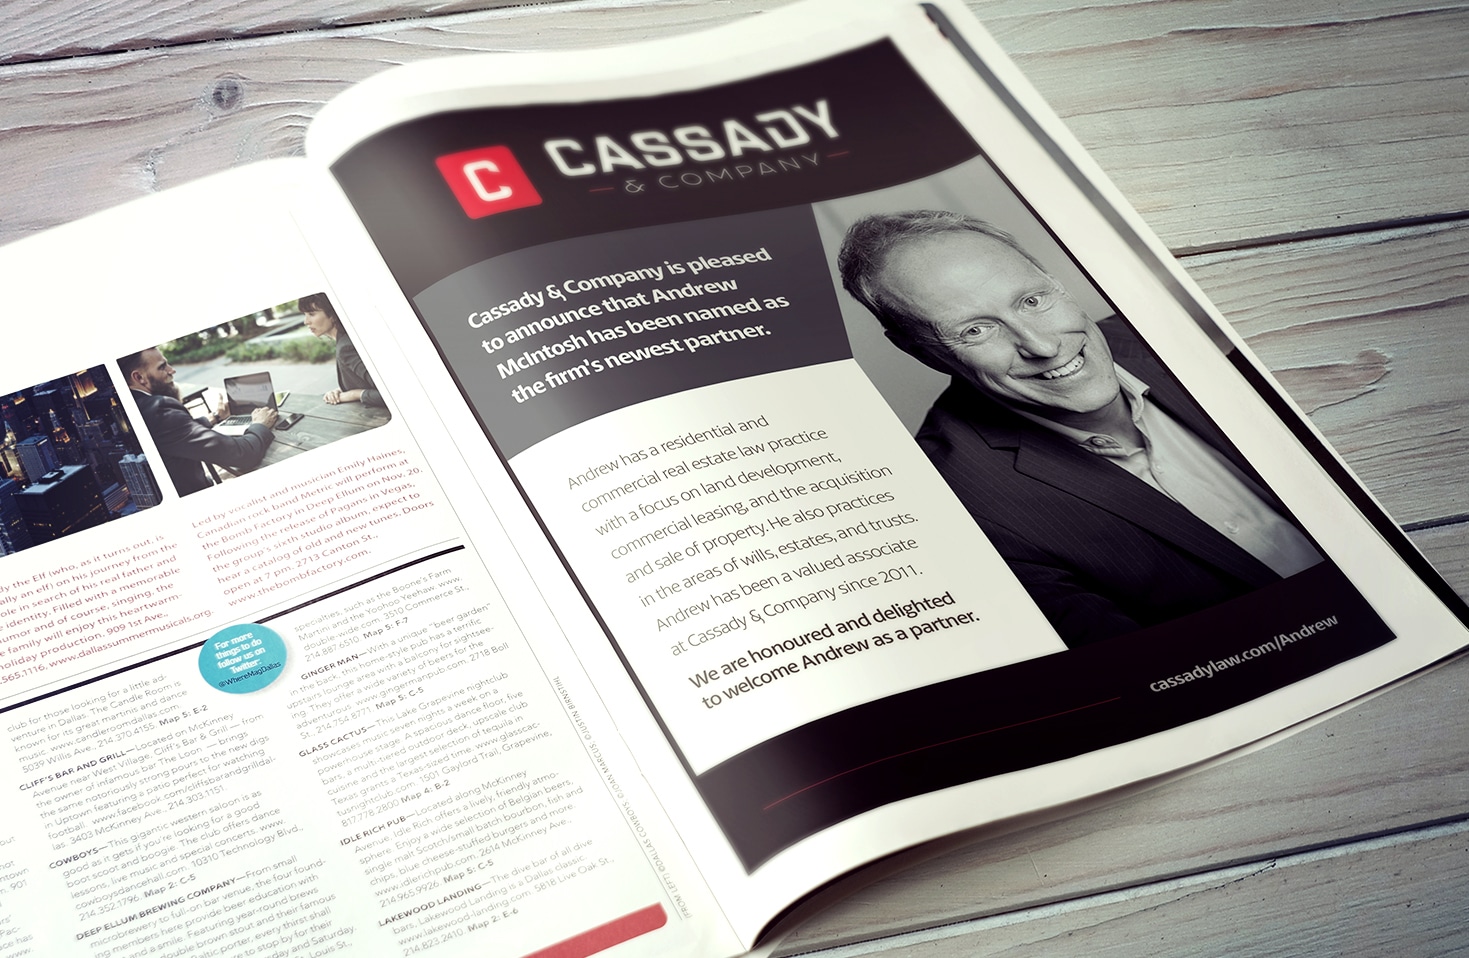 Print ad for Cassady & Company